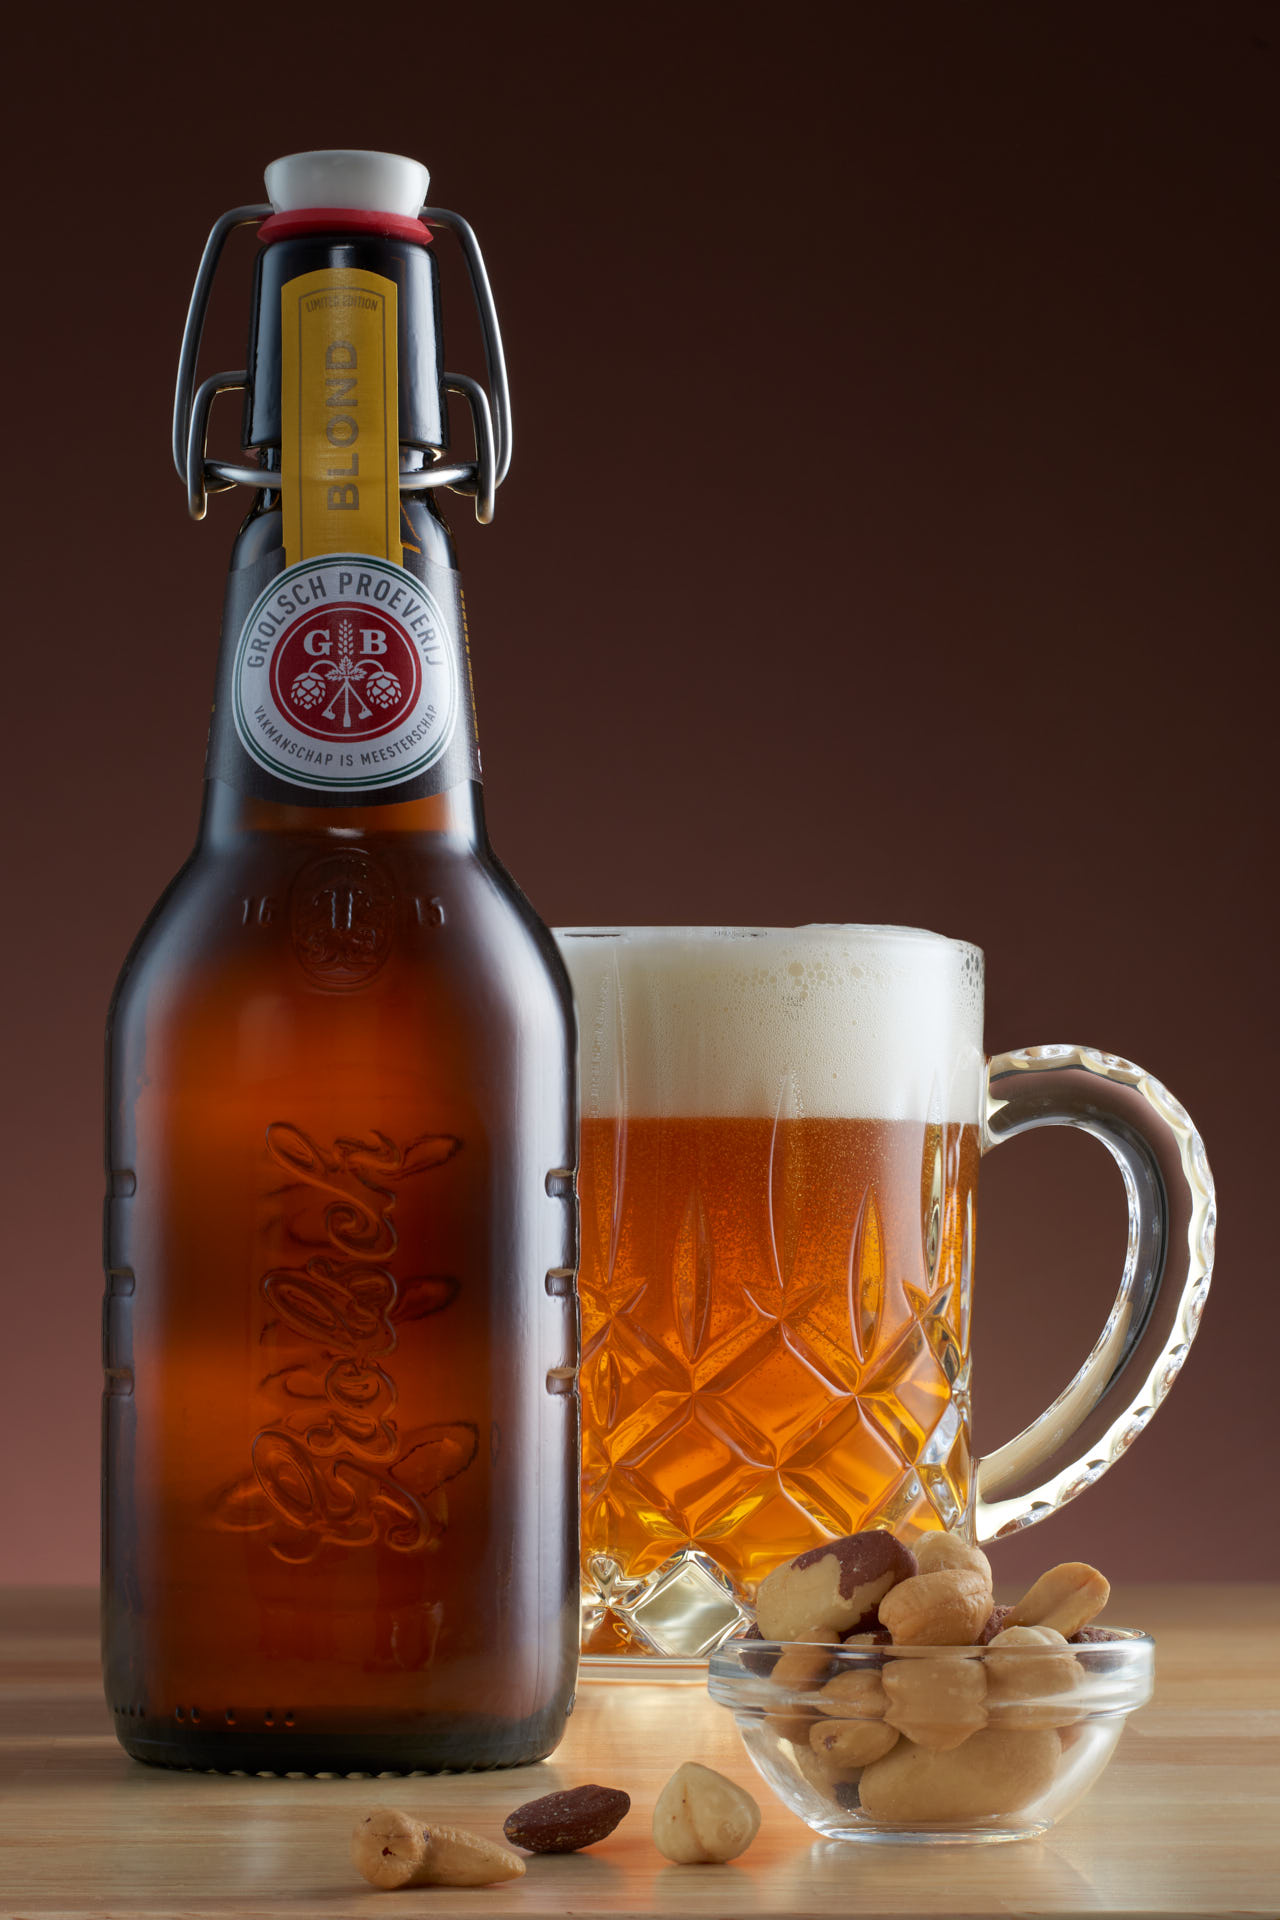 Productfotograaf Limburg - Grolsch Bier product fotoshoot